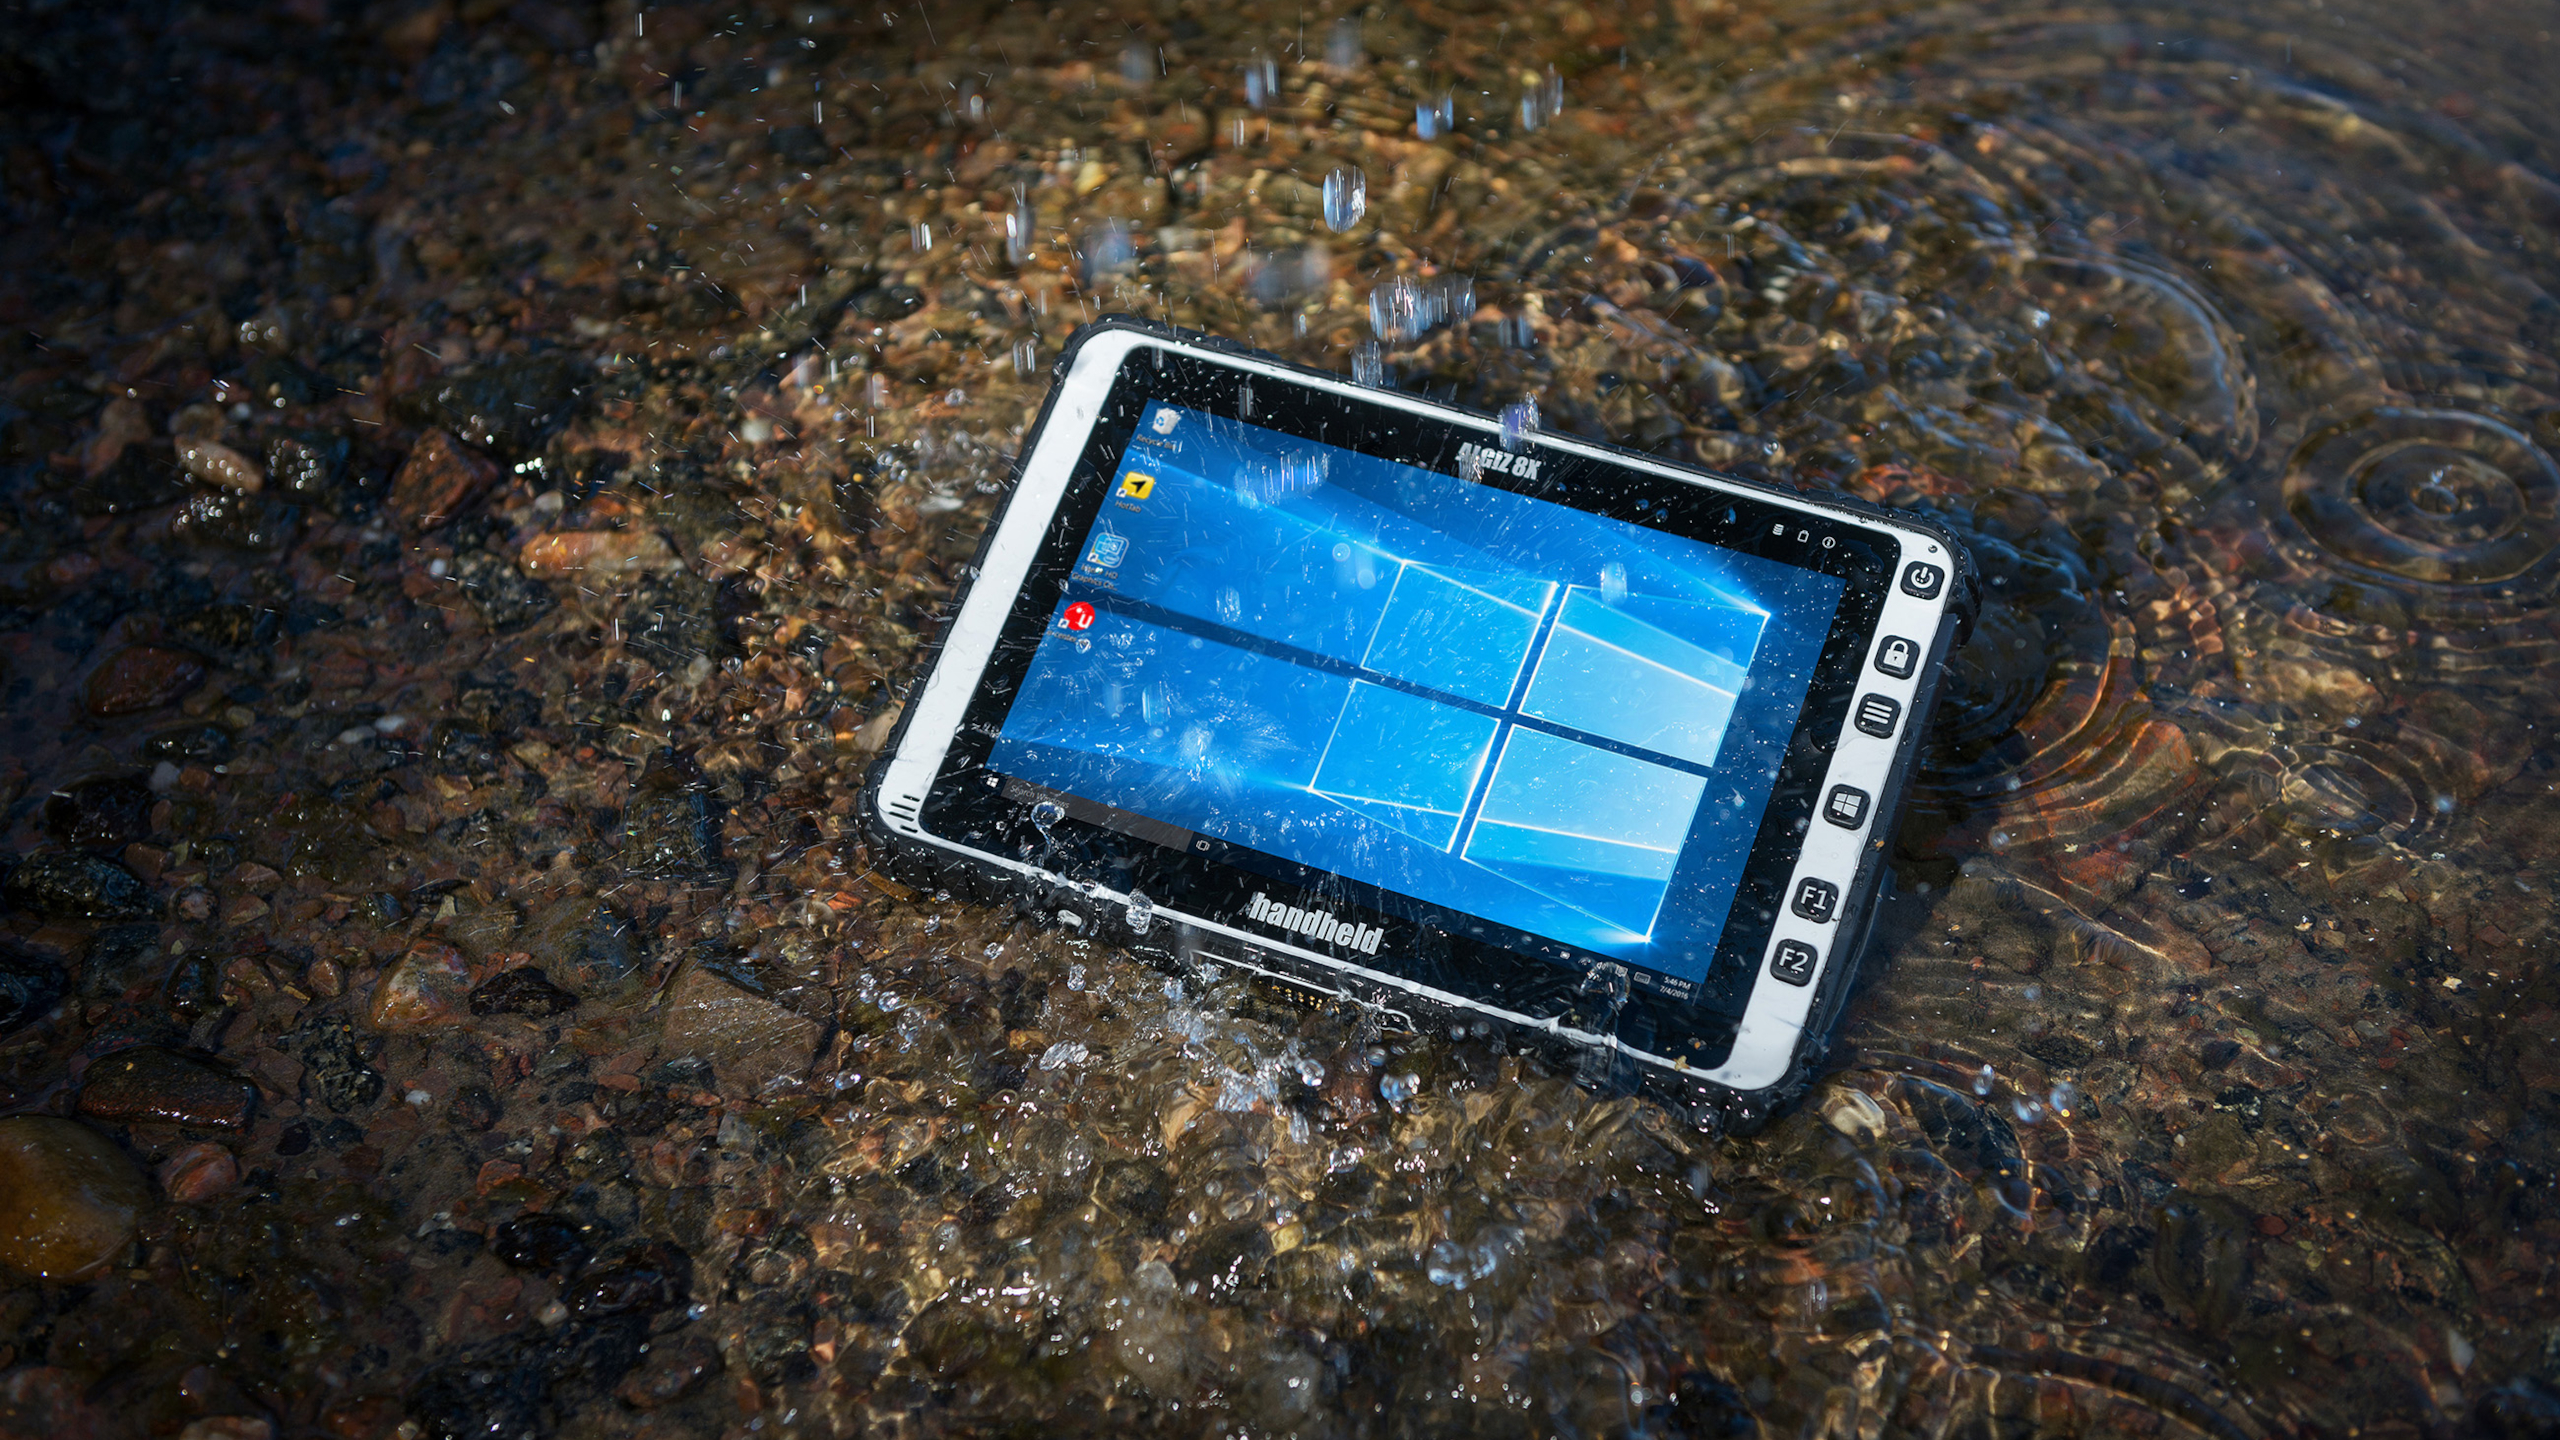 General 2560x1440 technology Windows 10 underwater tablet  Microsoft Windows operating system